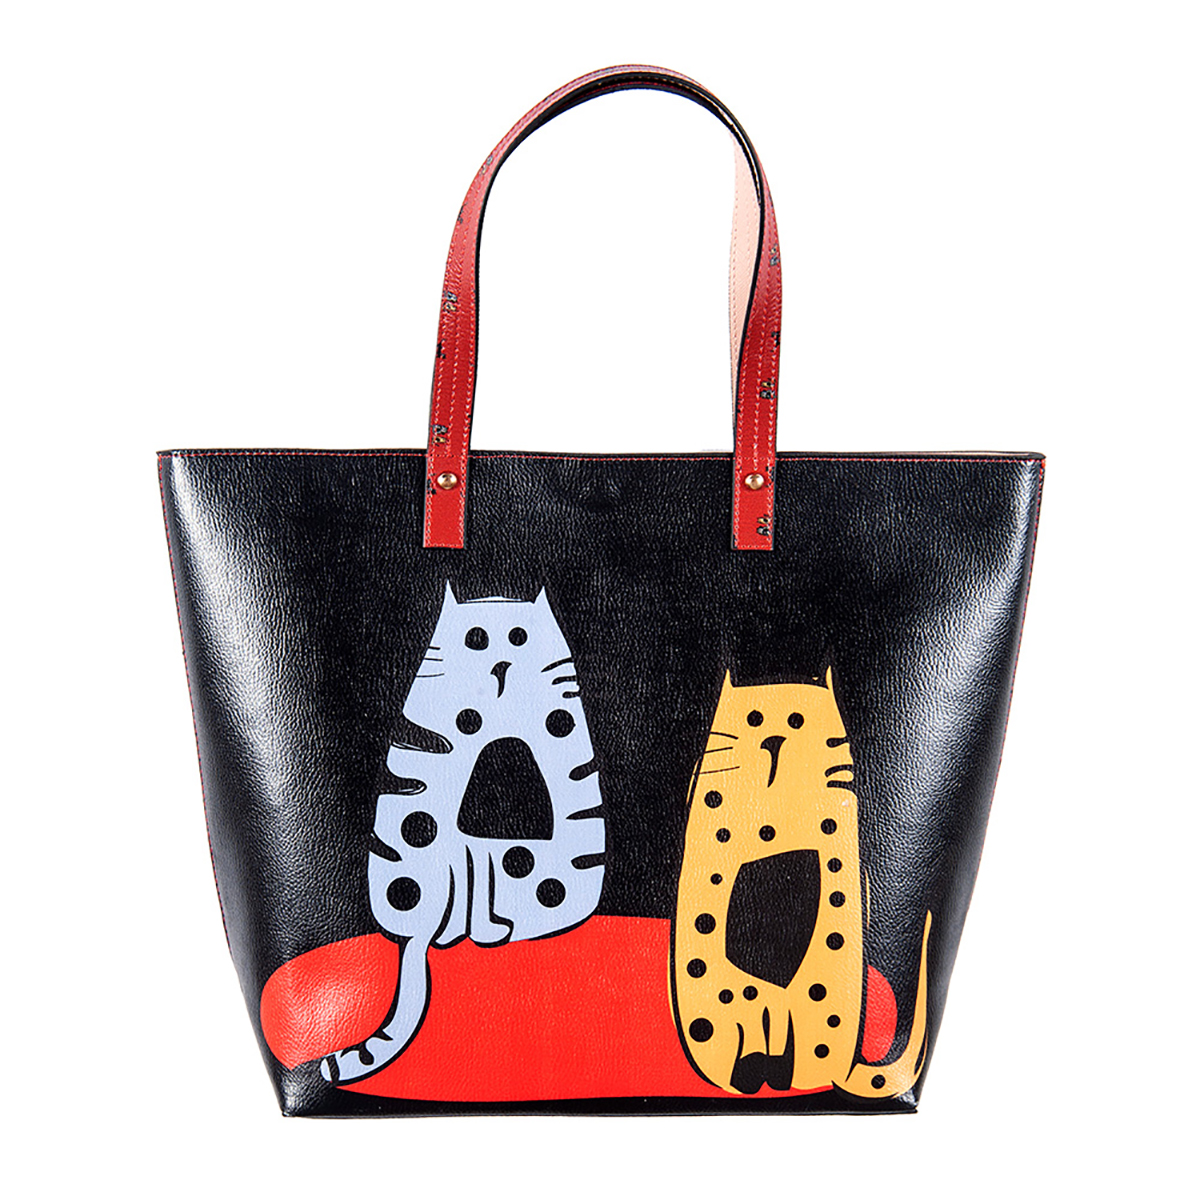 Biggdesign Cats Tote Shoulder Bag for Women, Waterproof, Large Capacity, Designer Handbags for Travel, Work or Daily Life